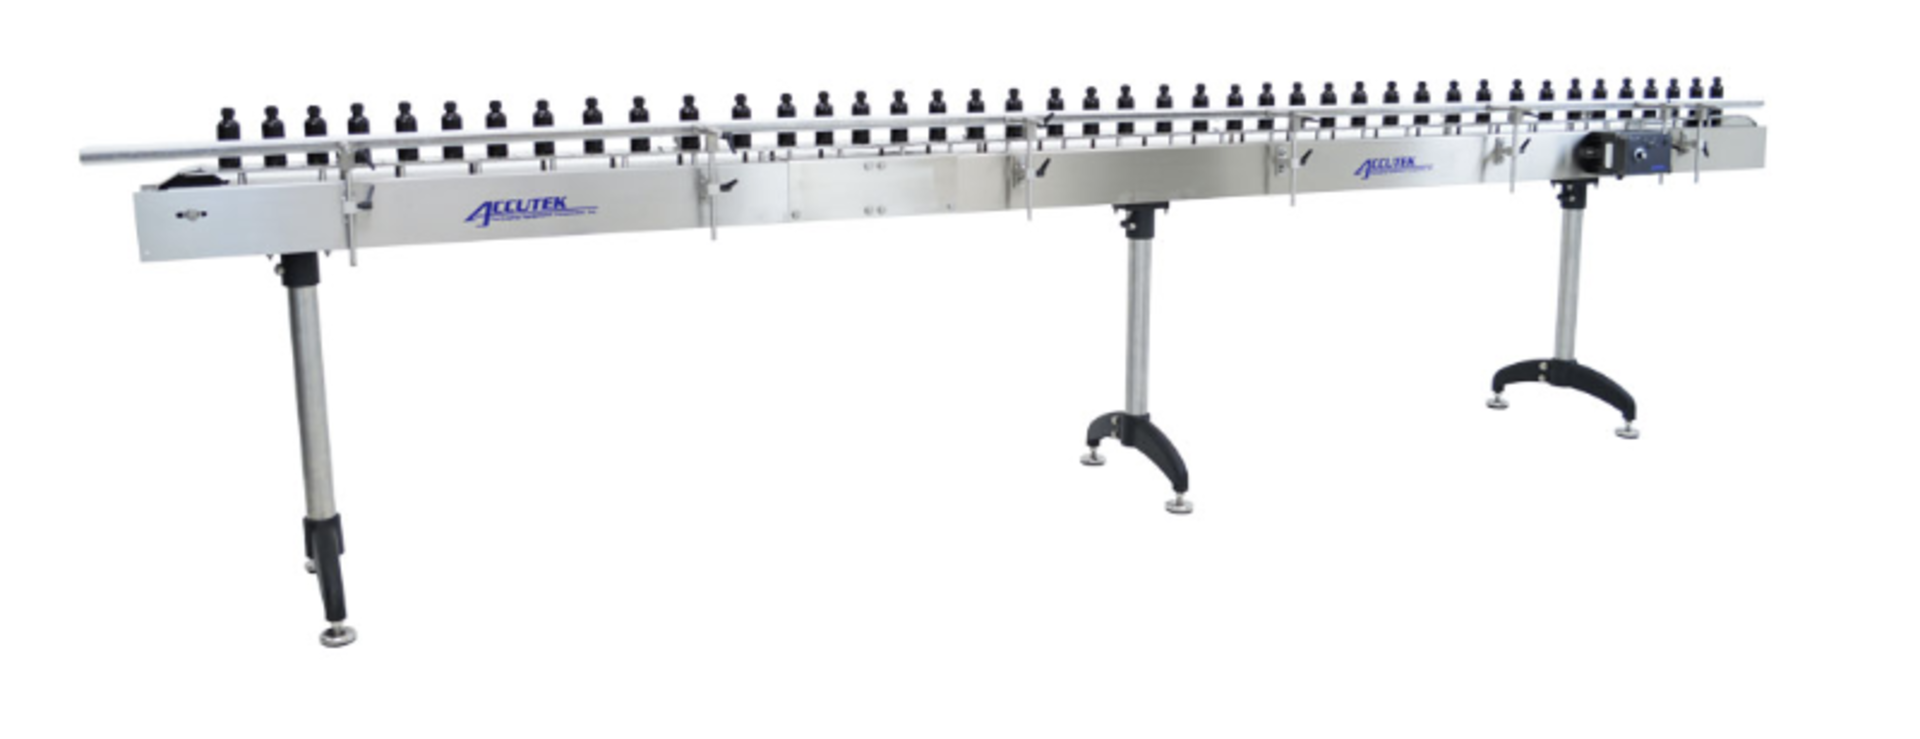 Variable Speed Conveyor - Image 11 of 13